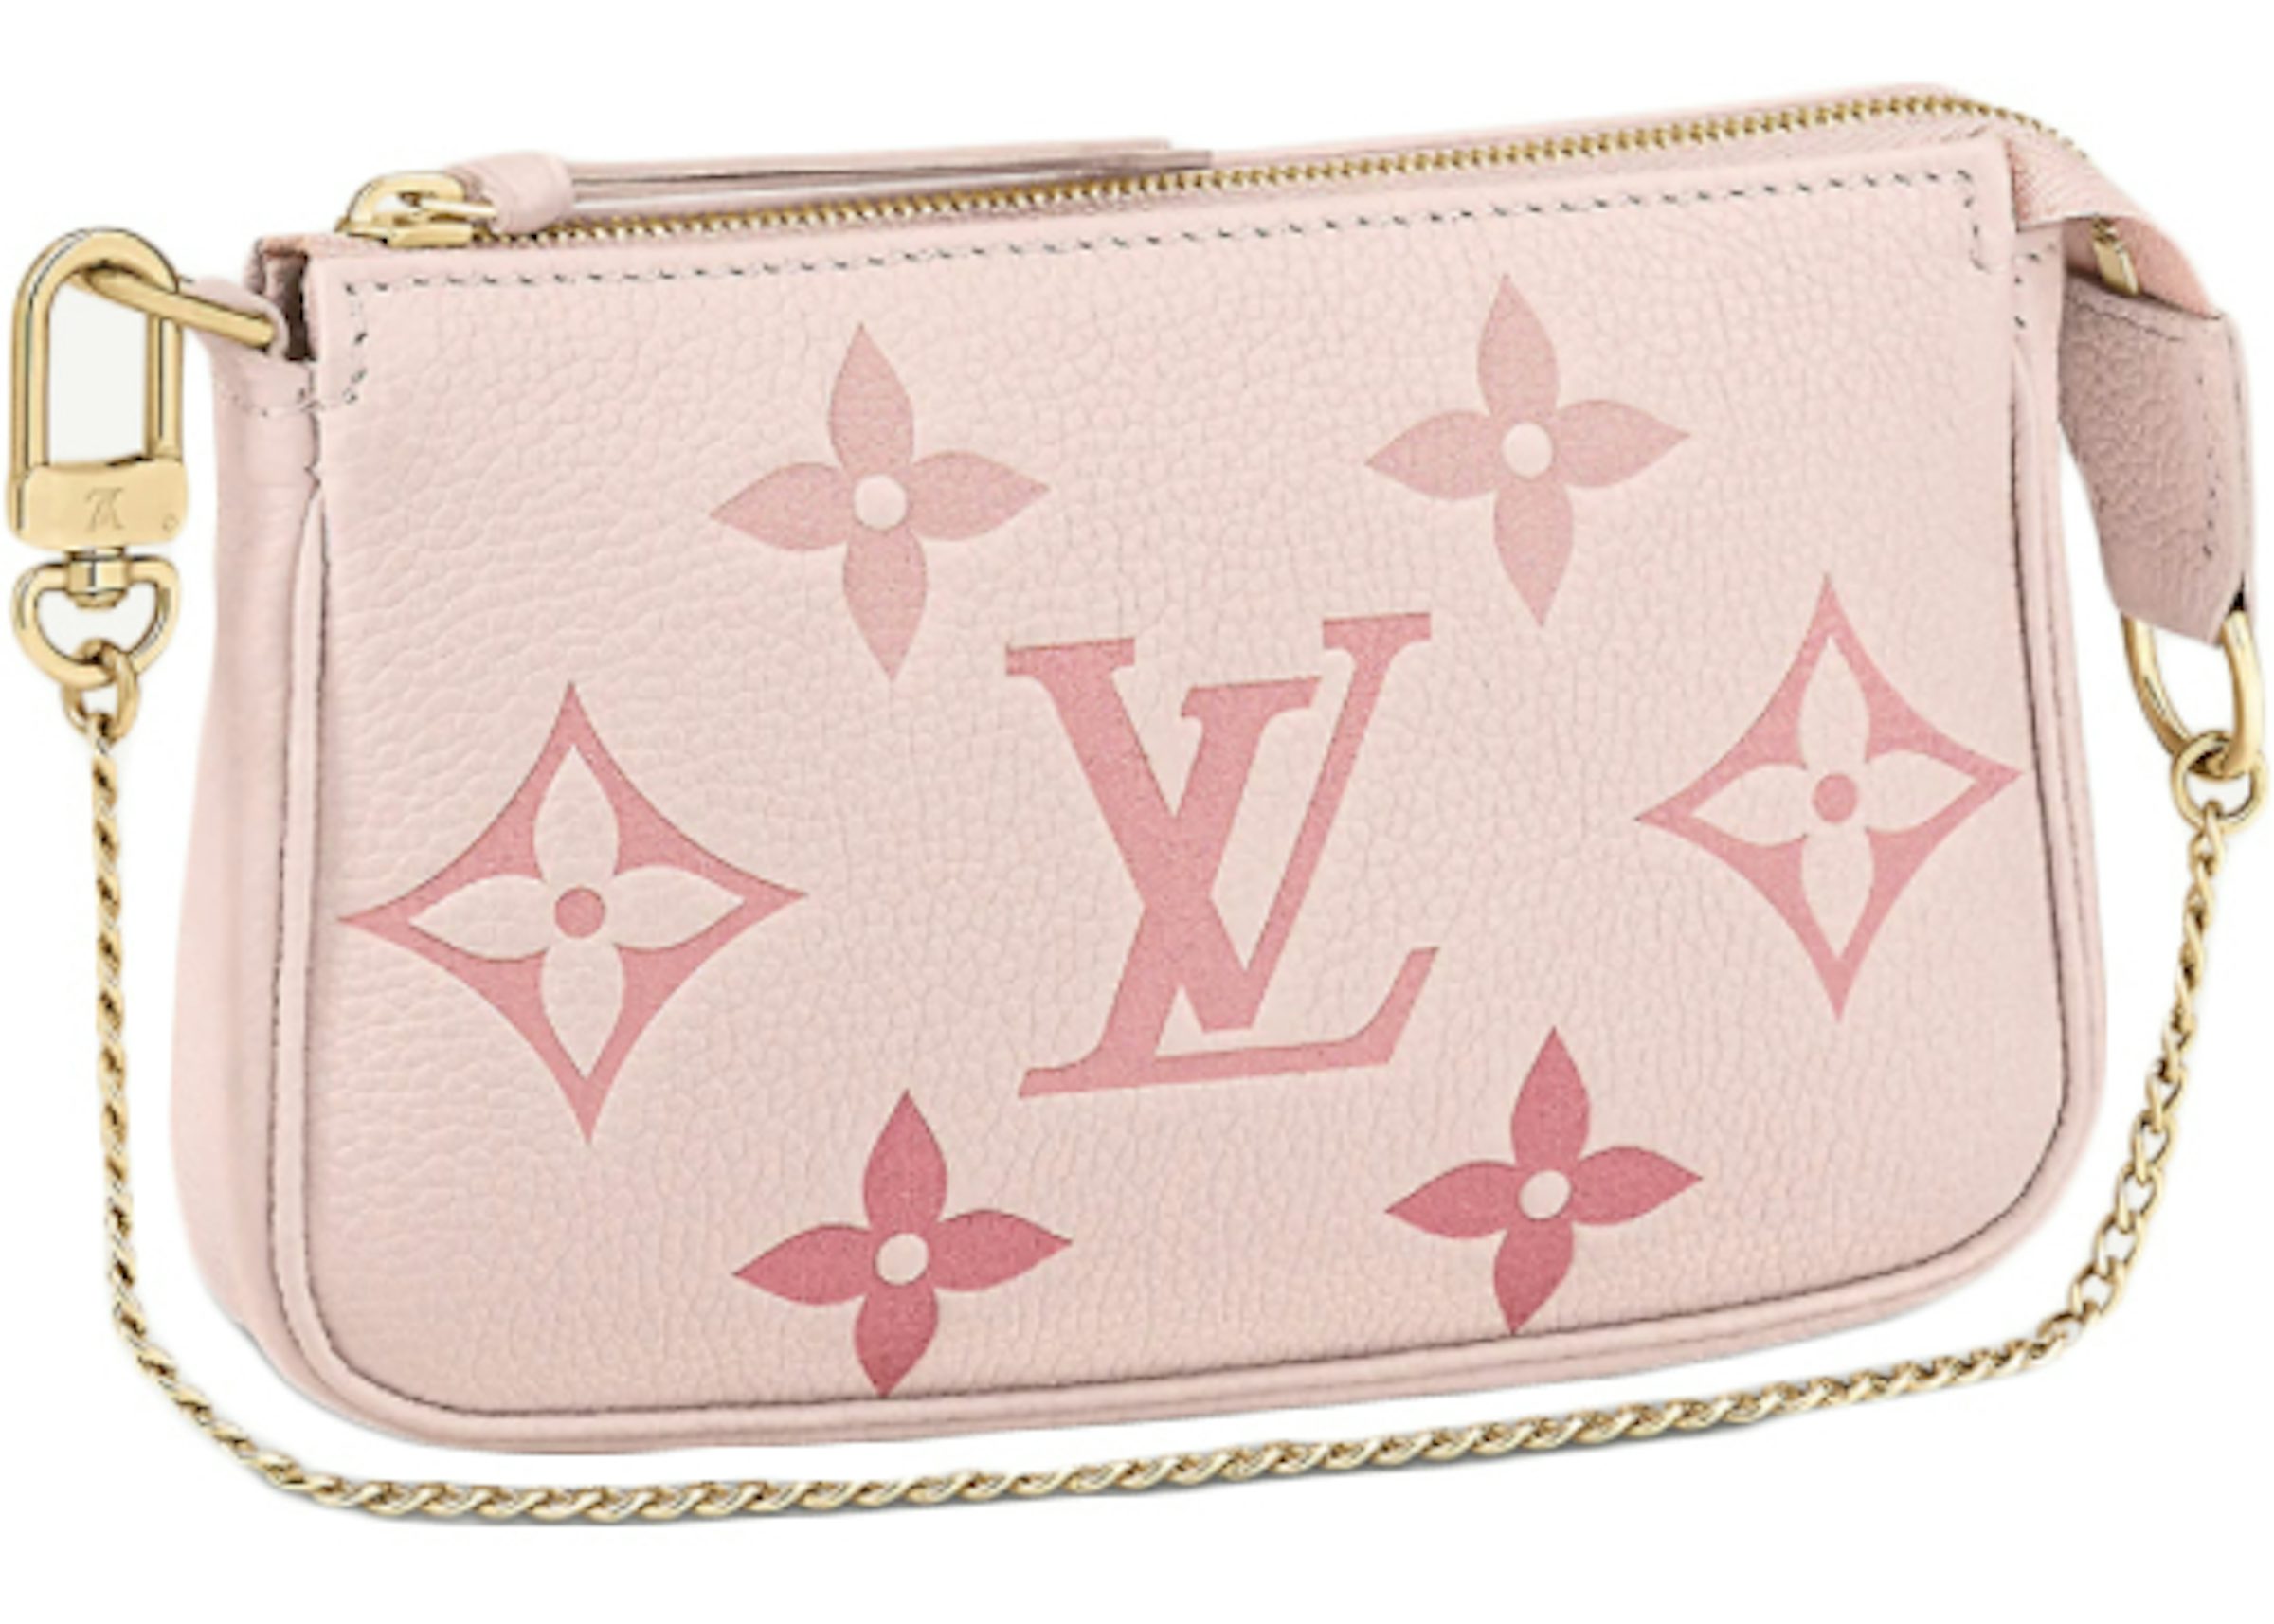 Buy Louis Vuitton Supreme Accessories - StockX